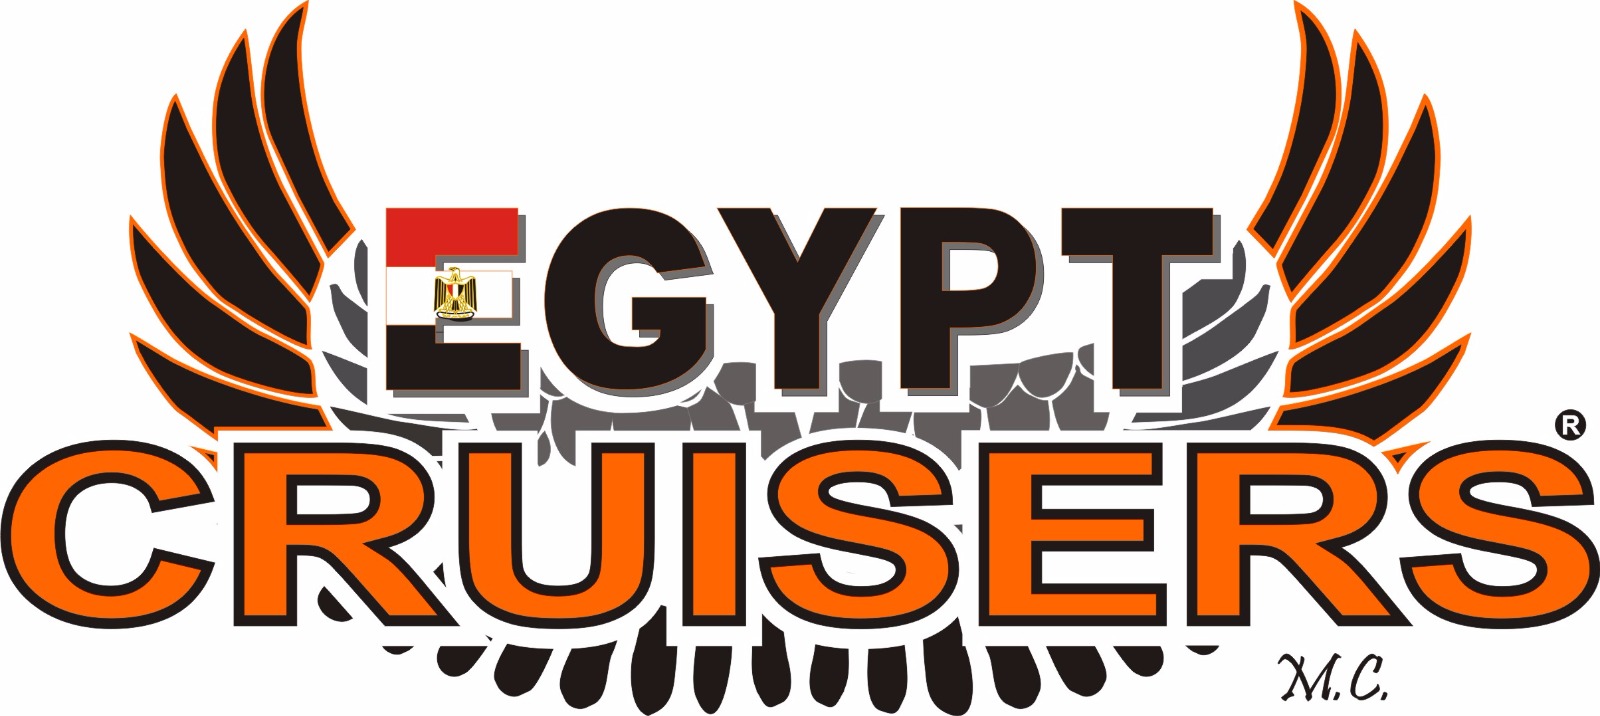 Egypt Cruisers